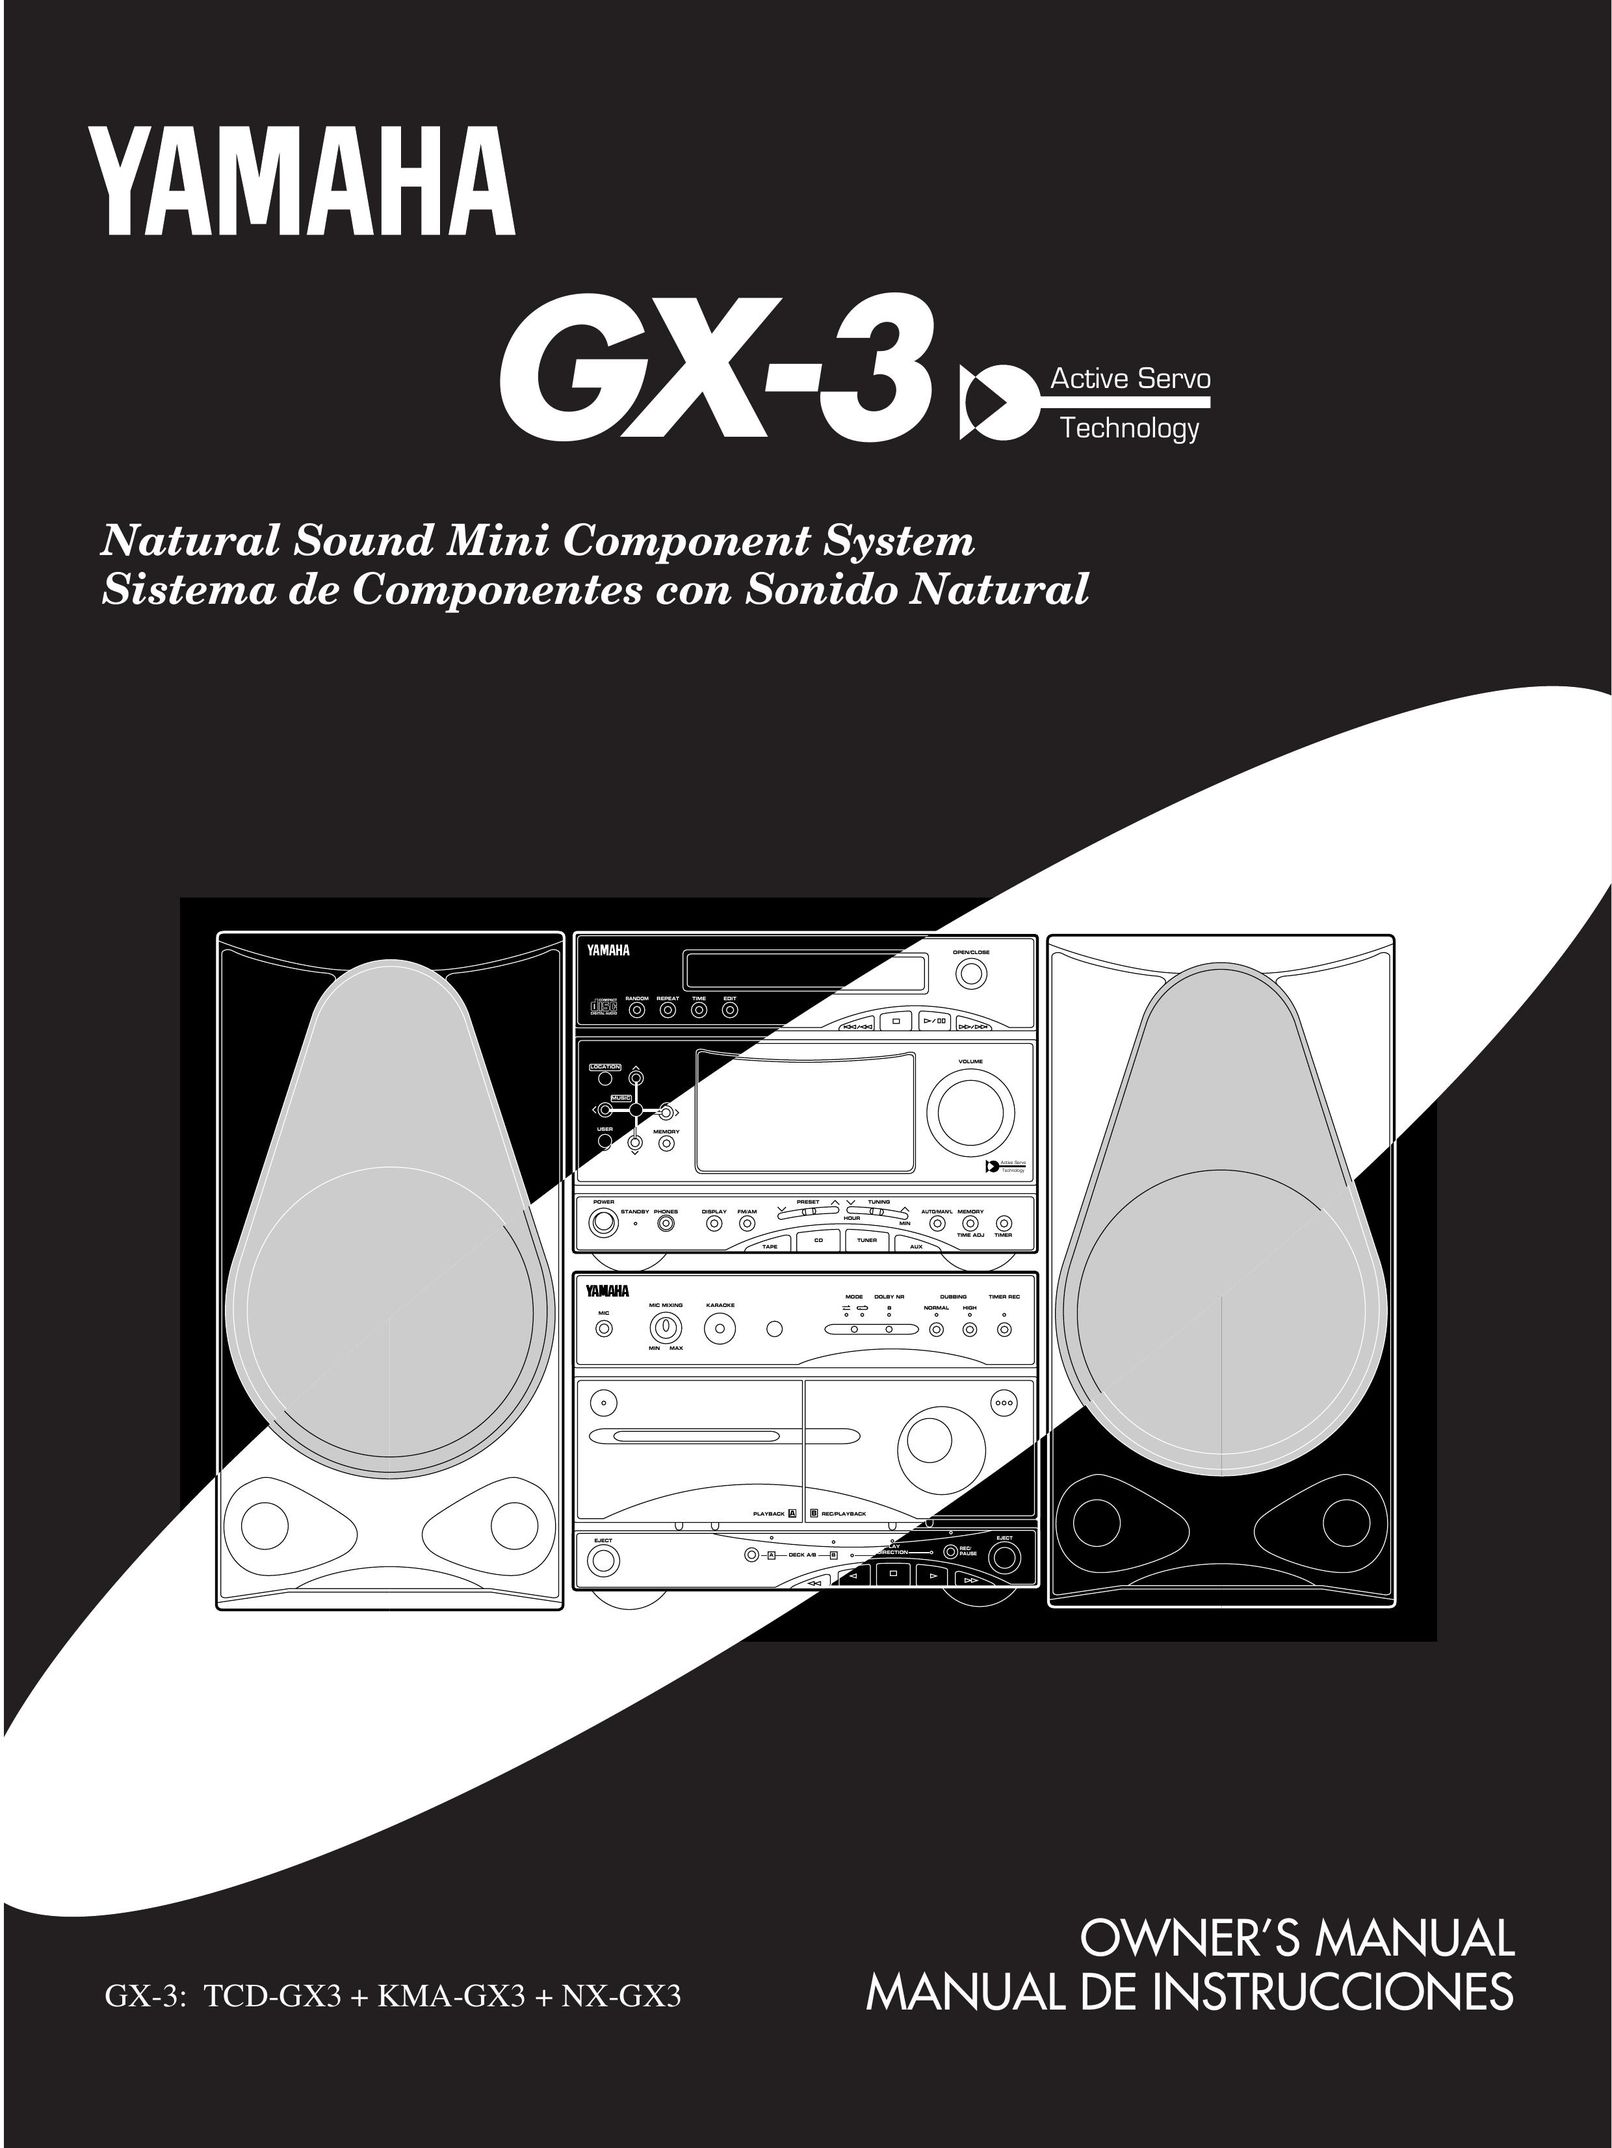 Yamaha GX-3 Speaker System User Manual